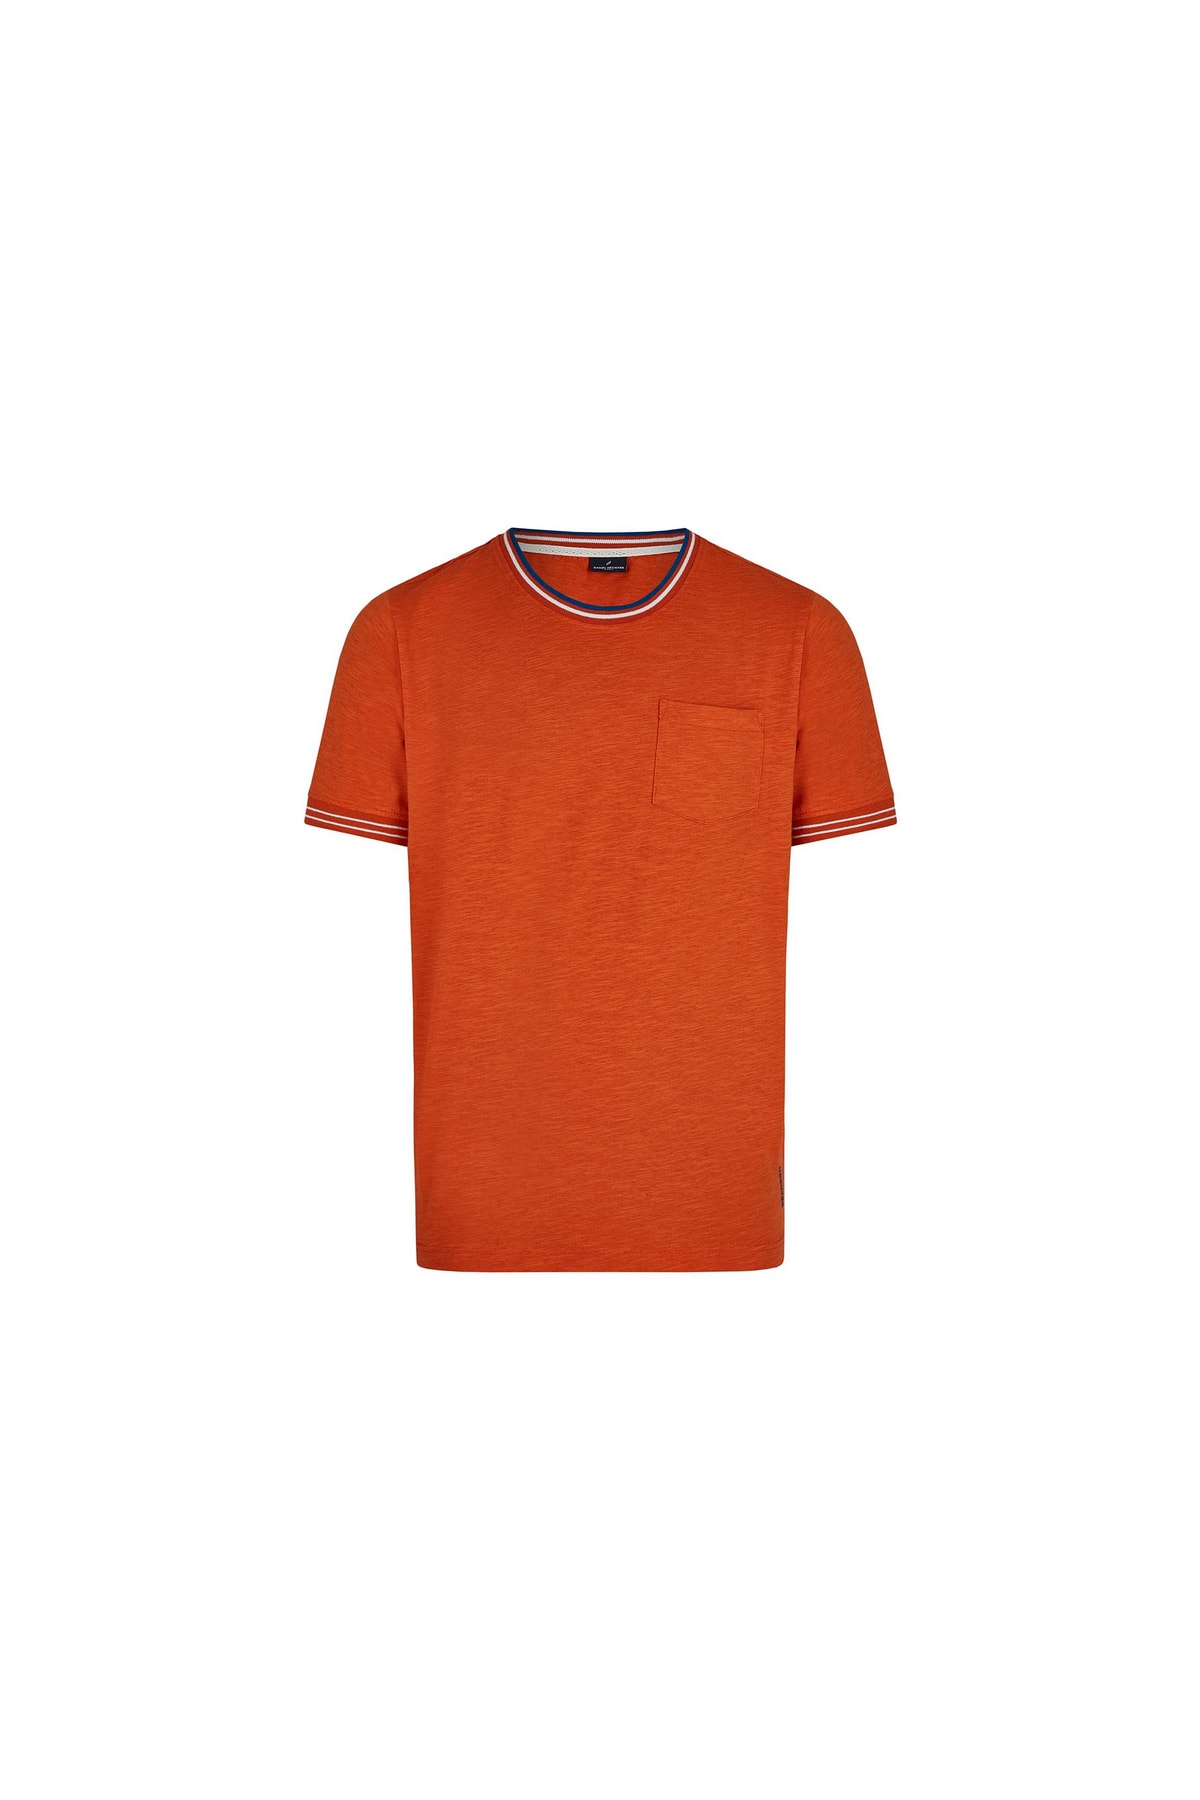 Daniel Hechter Hemd Orange Regular Fit Fast ausverkauft